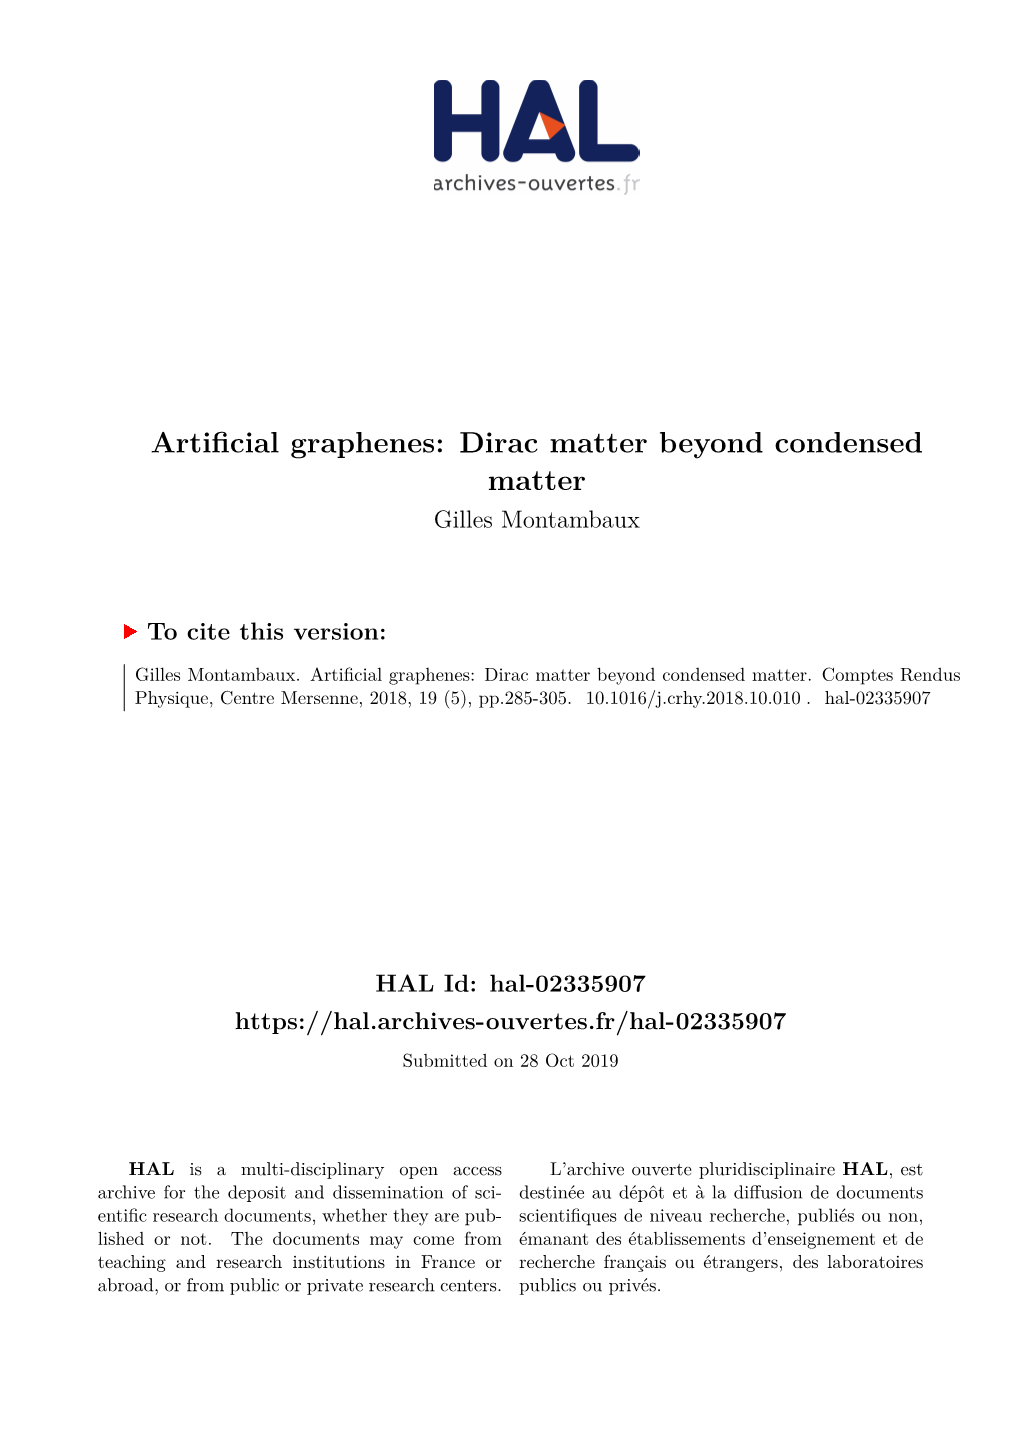 Artificial Graphenes: Dirac Matter Beyond Condensed Matter Gilles Montambaux